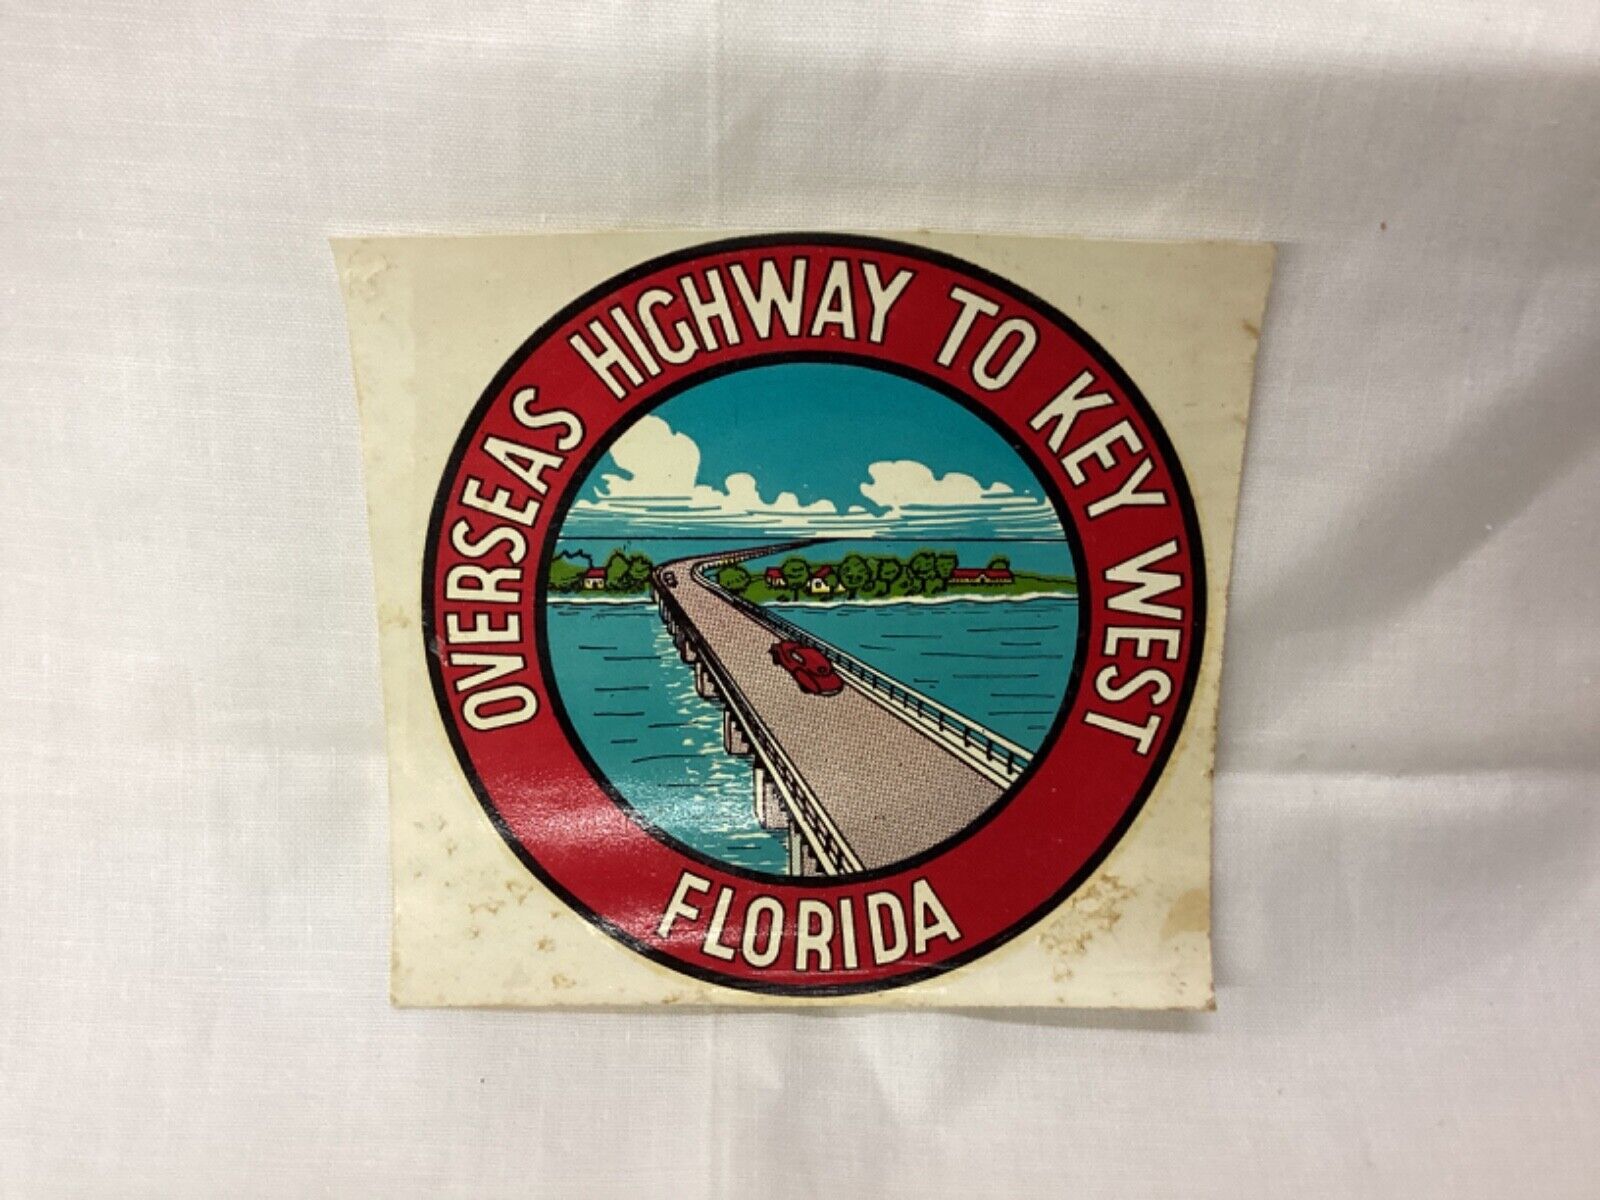 Vintage KEY WEST FLORIDA Travel Suitcase Luggage Decal Sticker Overseas Highway